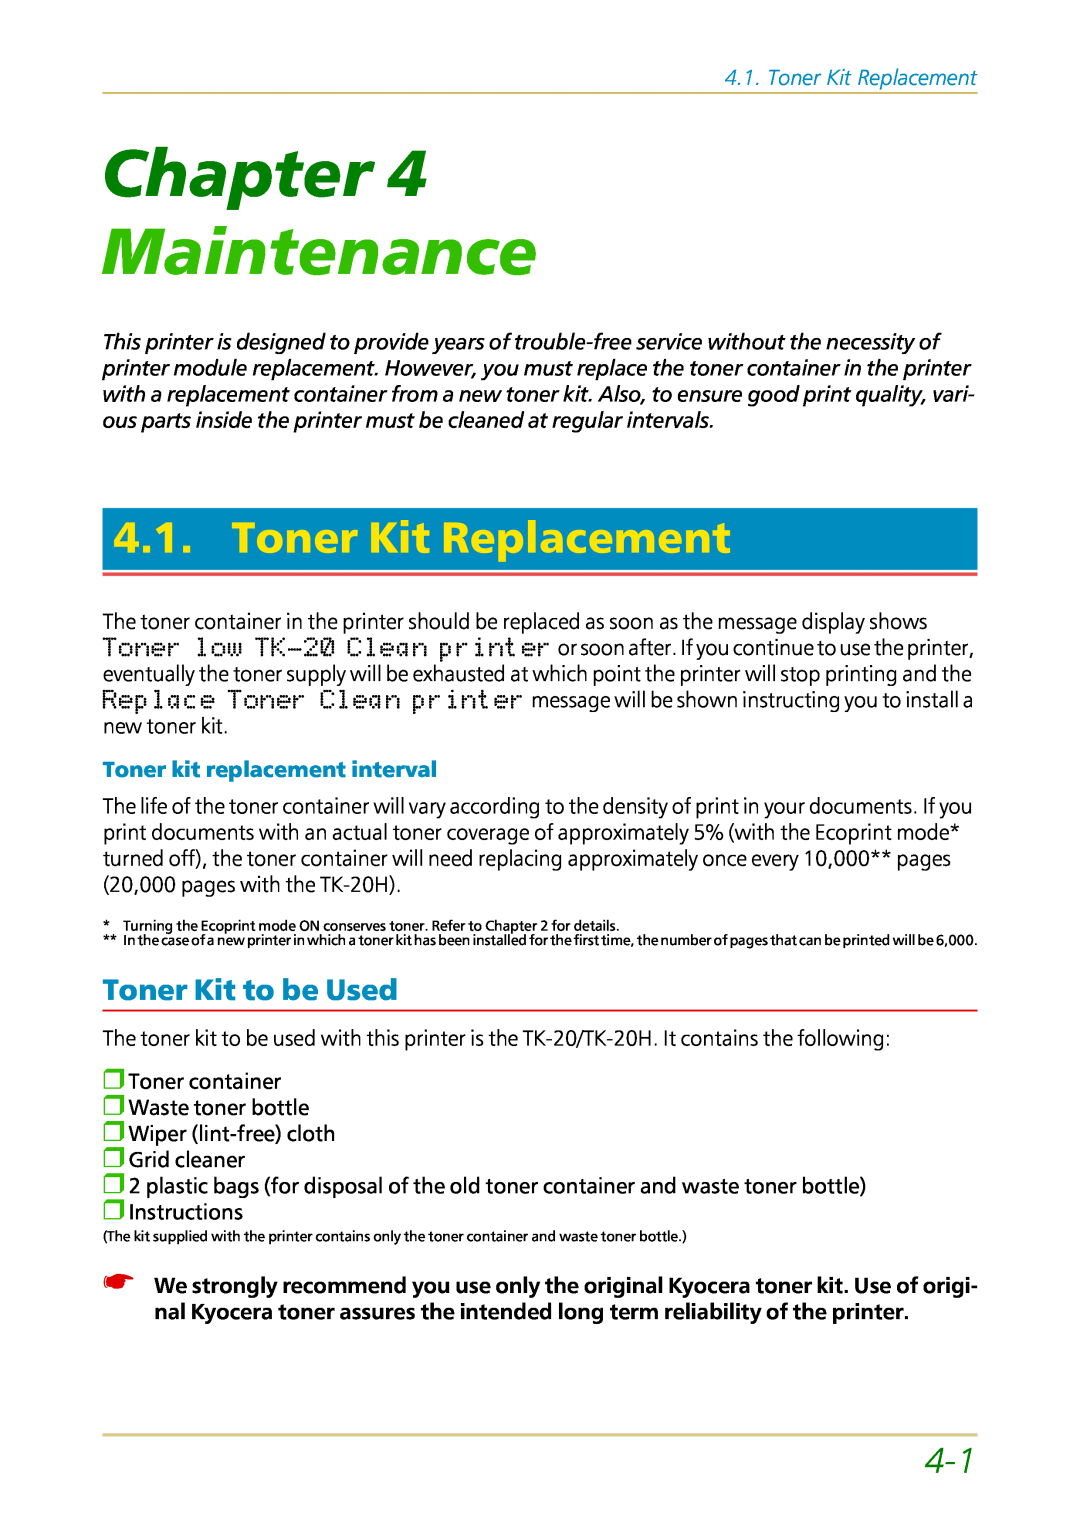 Kyocera FS-1700 Maintenance, Toner Kit Replacement, Toner Kit to be Used, Chapter, Toner kit replacement interval 